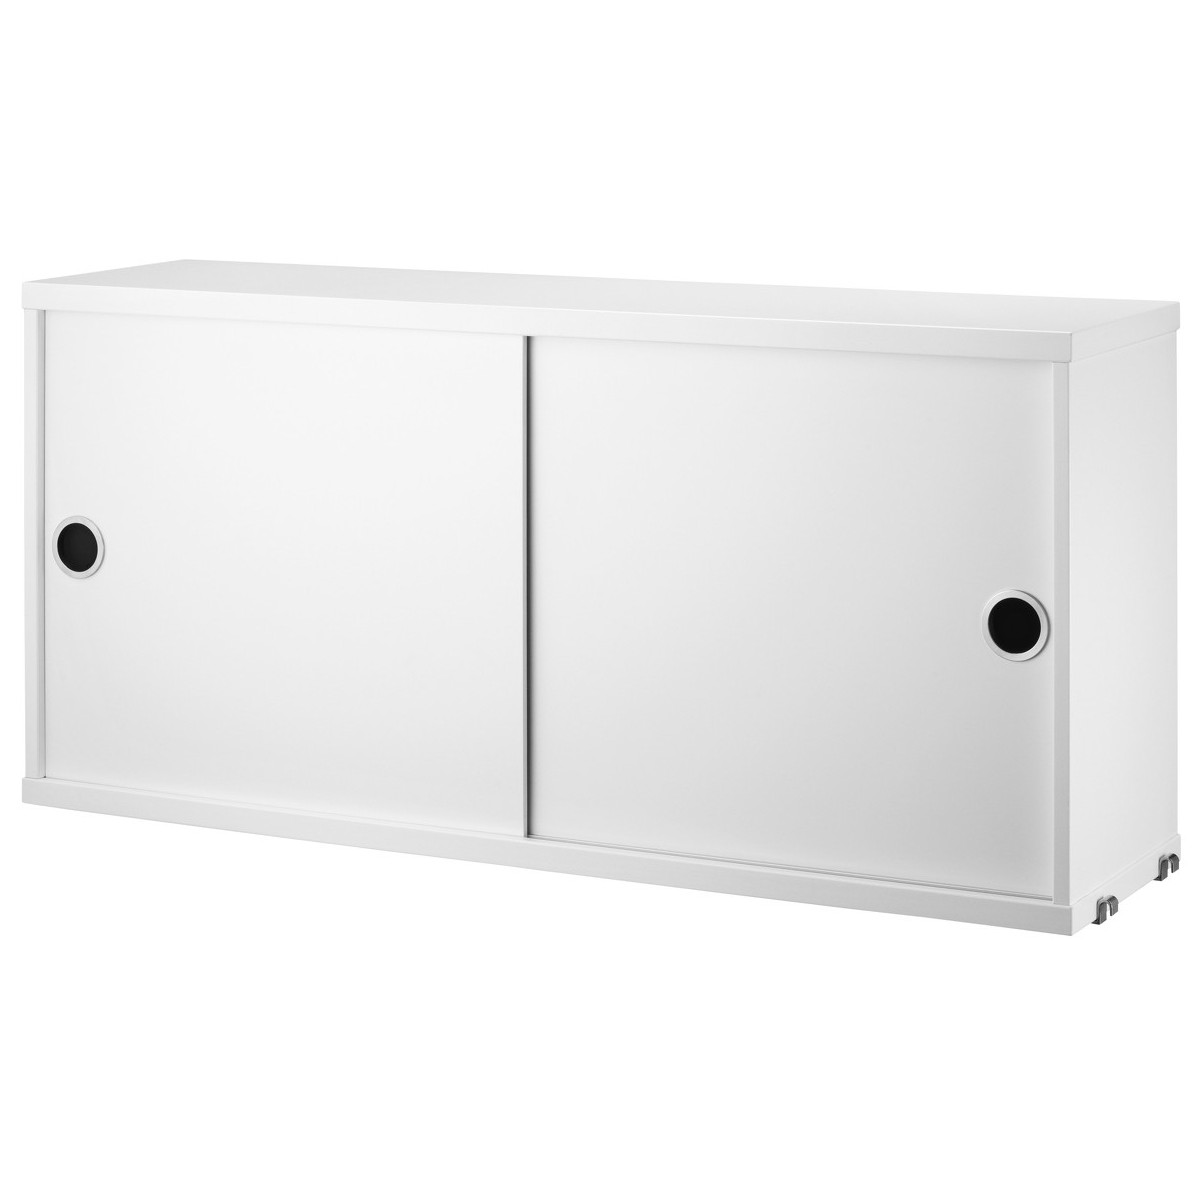 Cabinet sliding doors - white - W78xD20xH37 cm